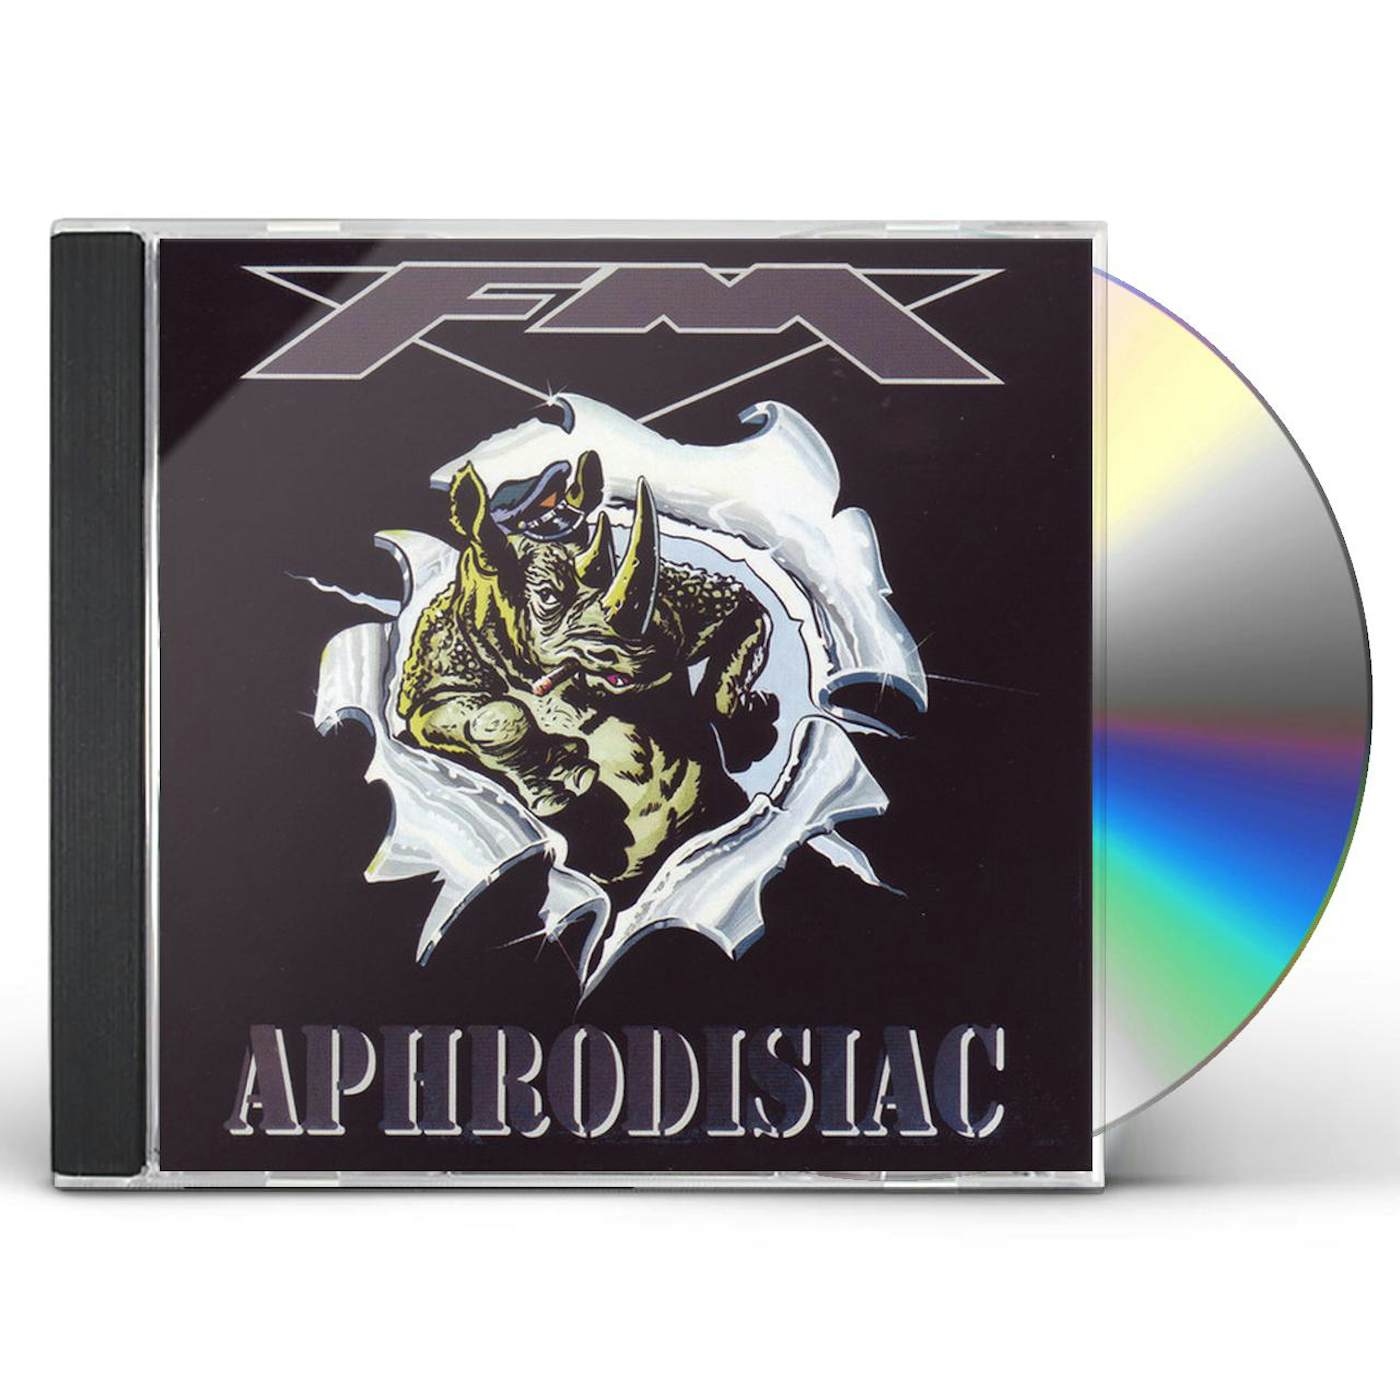 FM APHRODISIAC CD